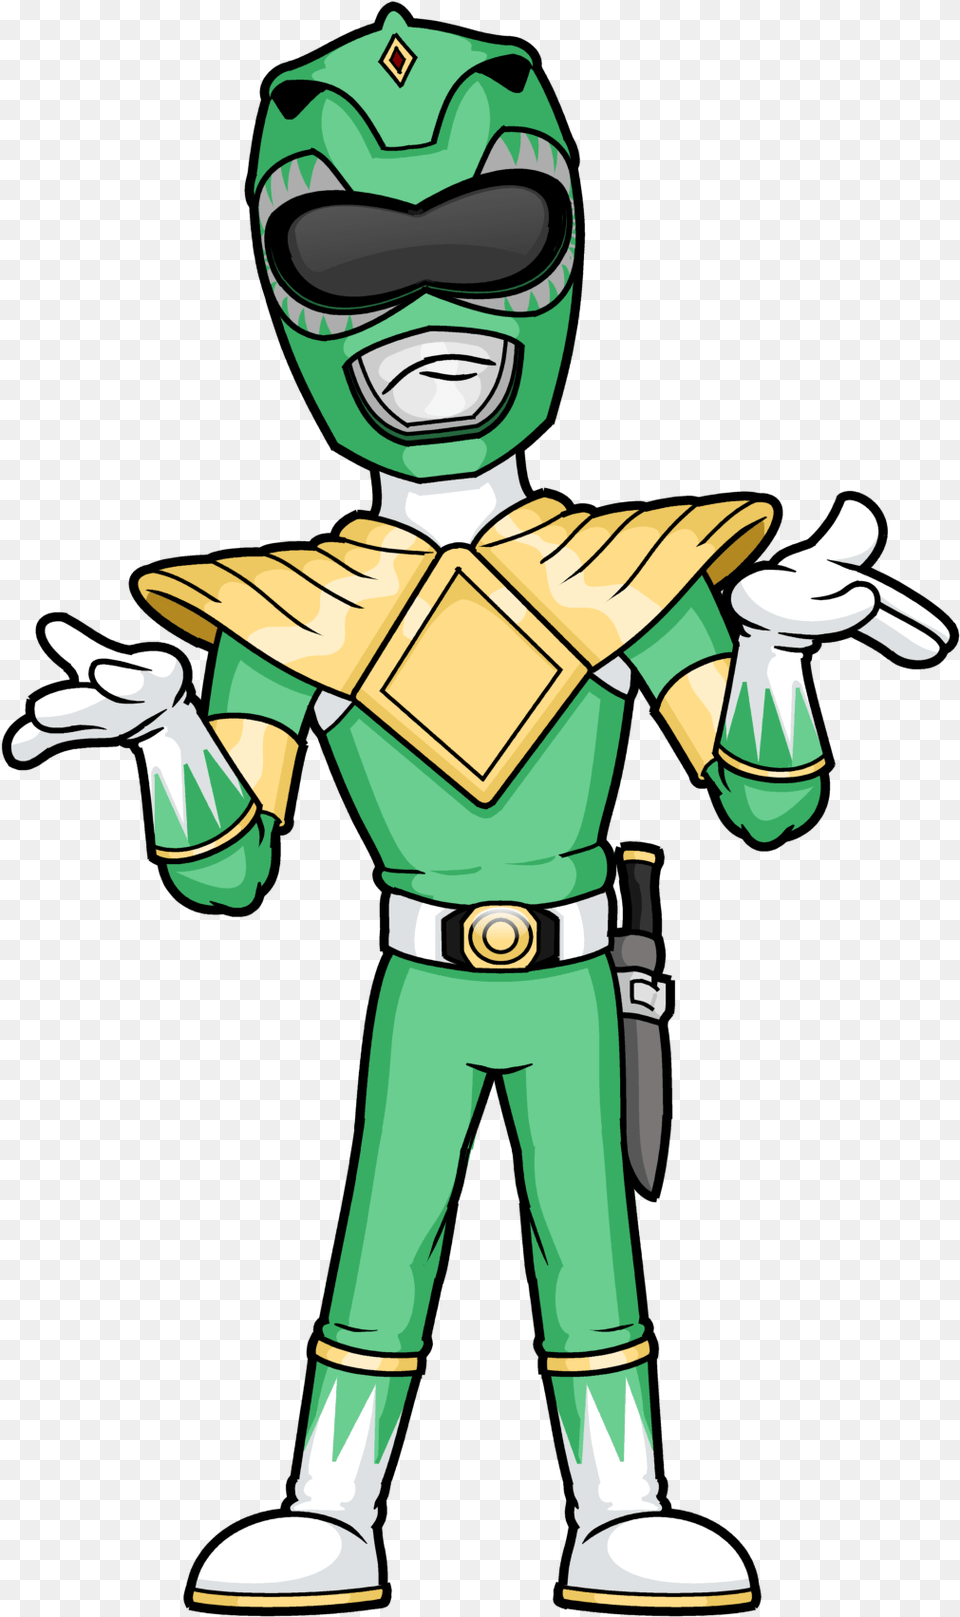 The Green Power Ranger Power Ranger Dibujo Animado, Clothing, Costume, Person, Face Png Image